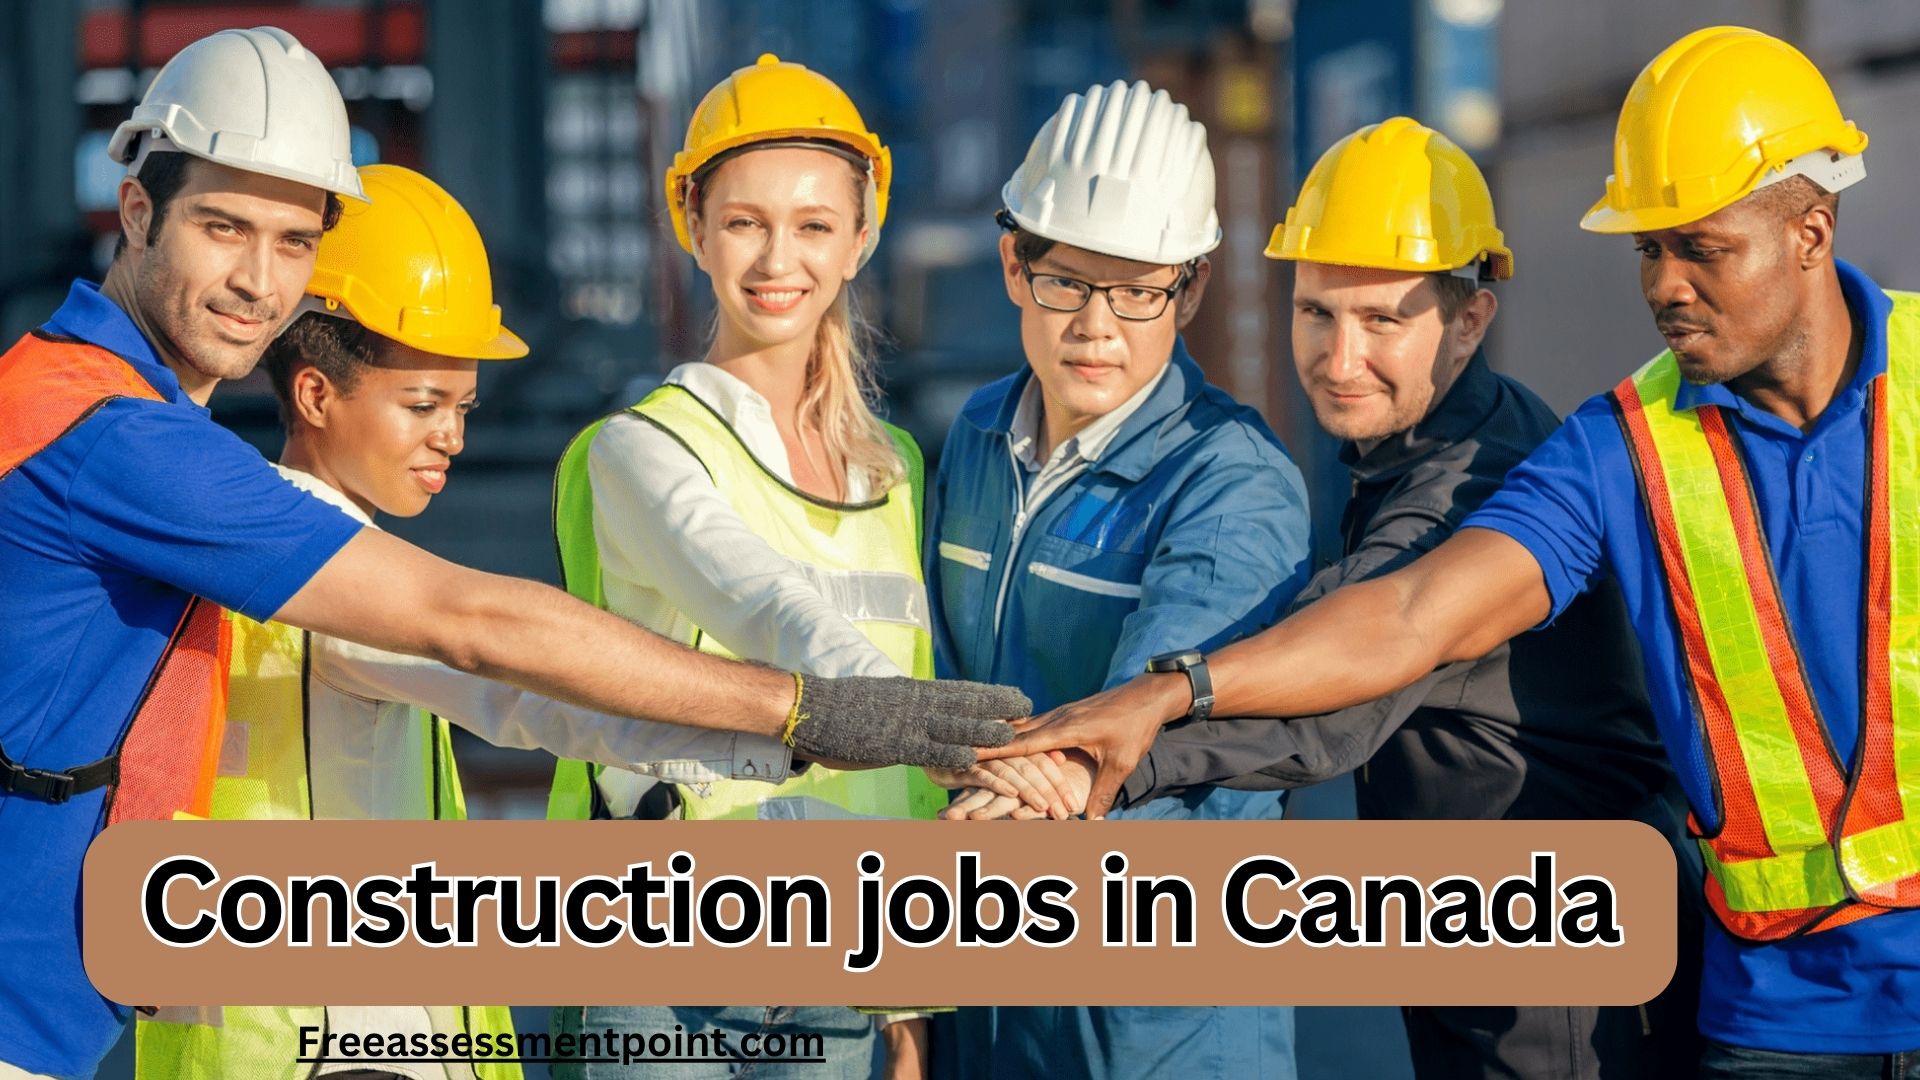 Construction jobs in Canada